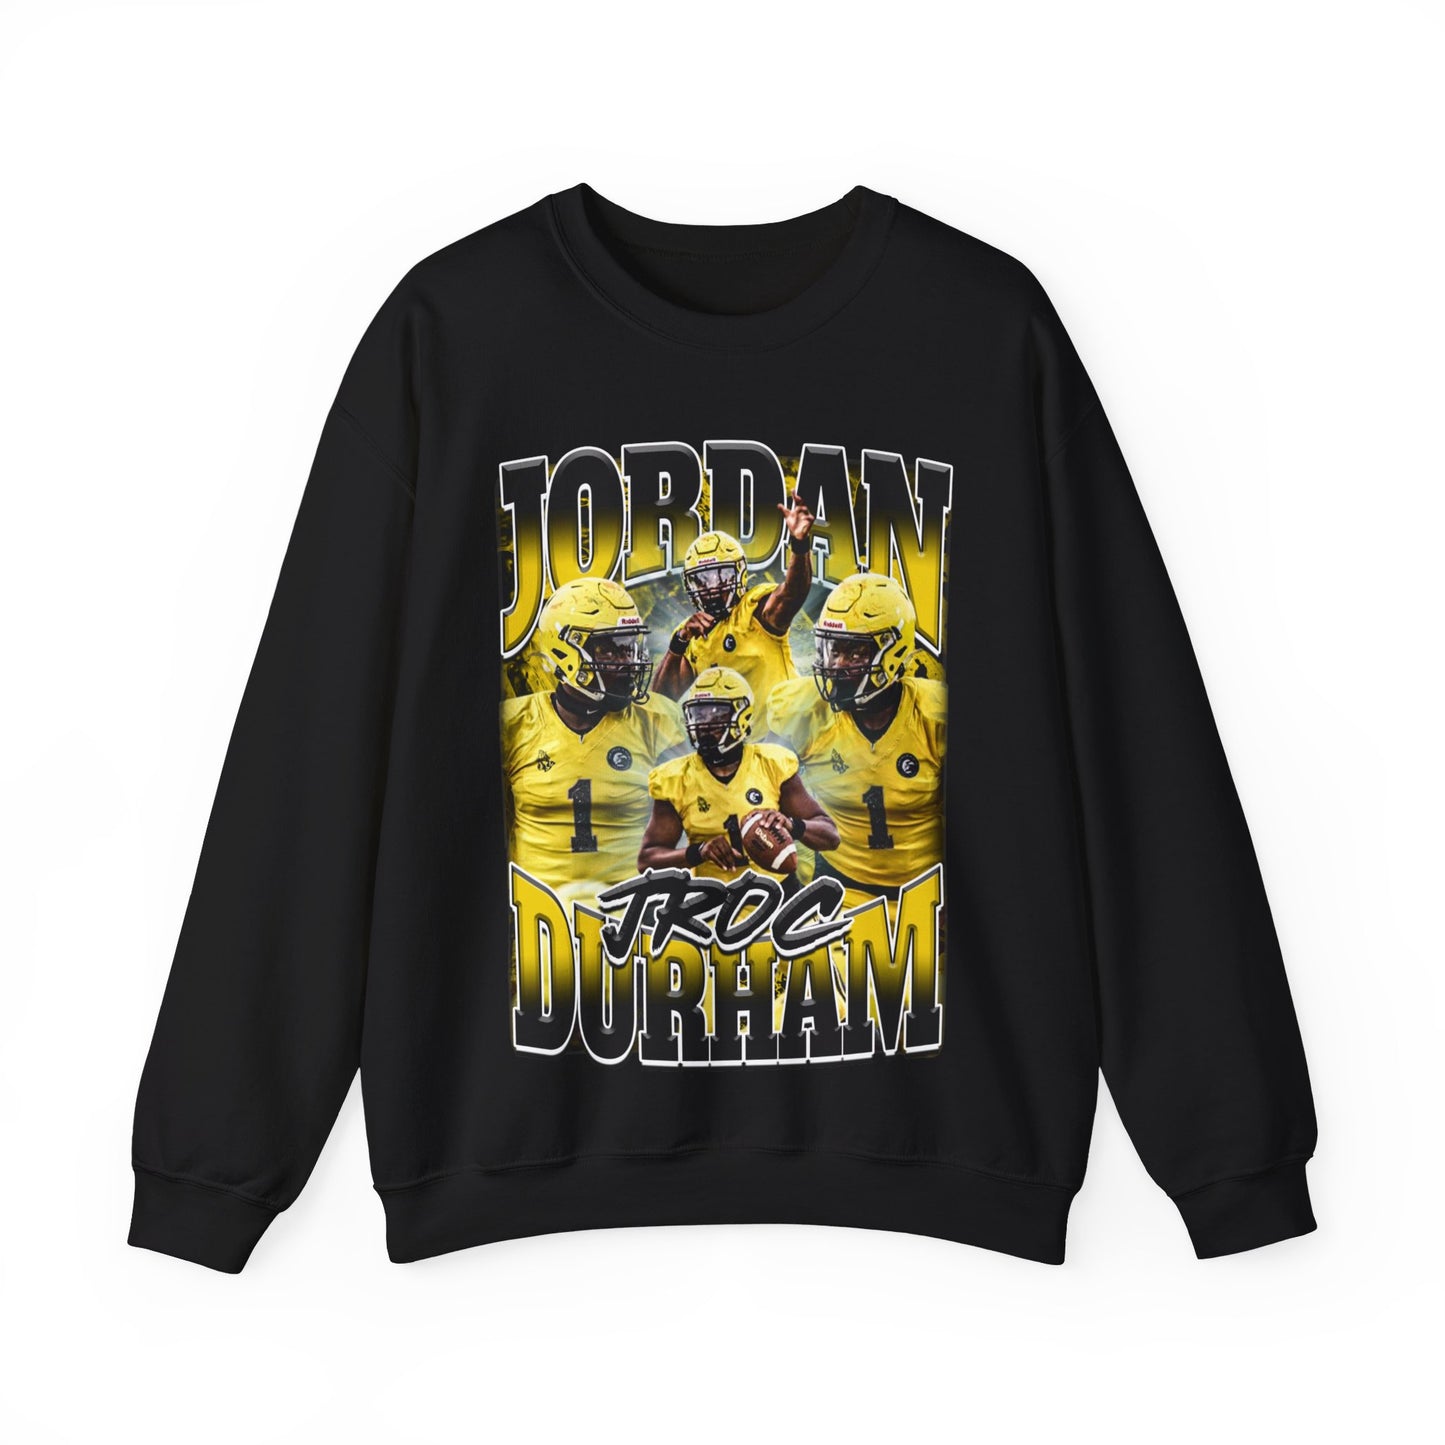 Jordan Durham Crewneck Sweatshirt